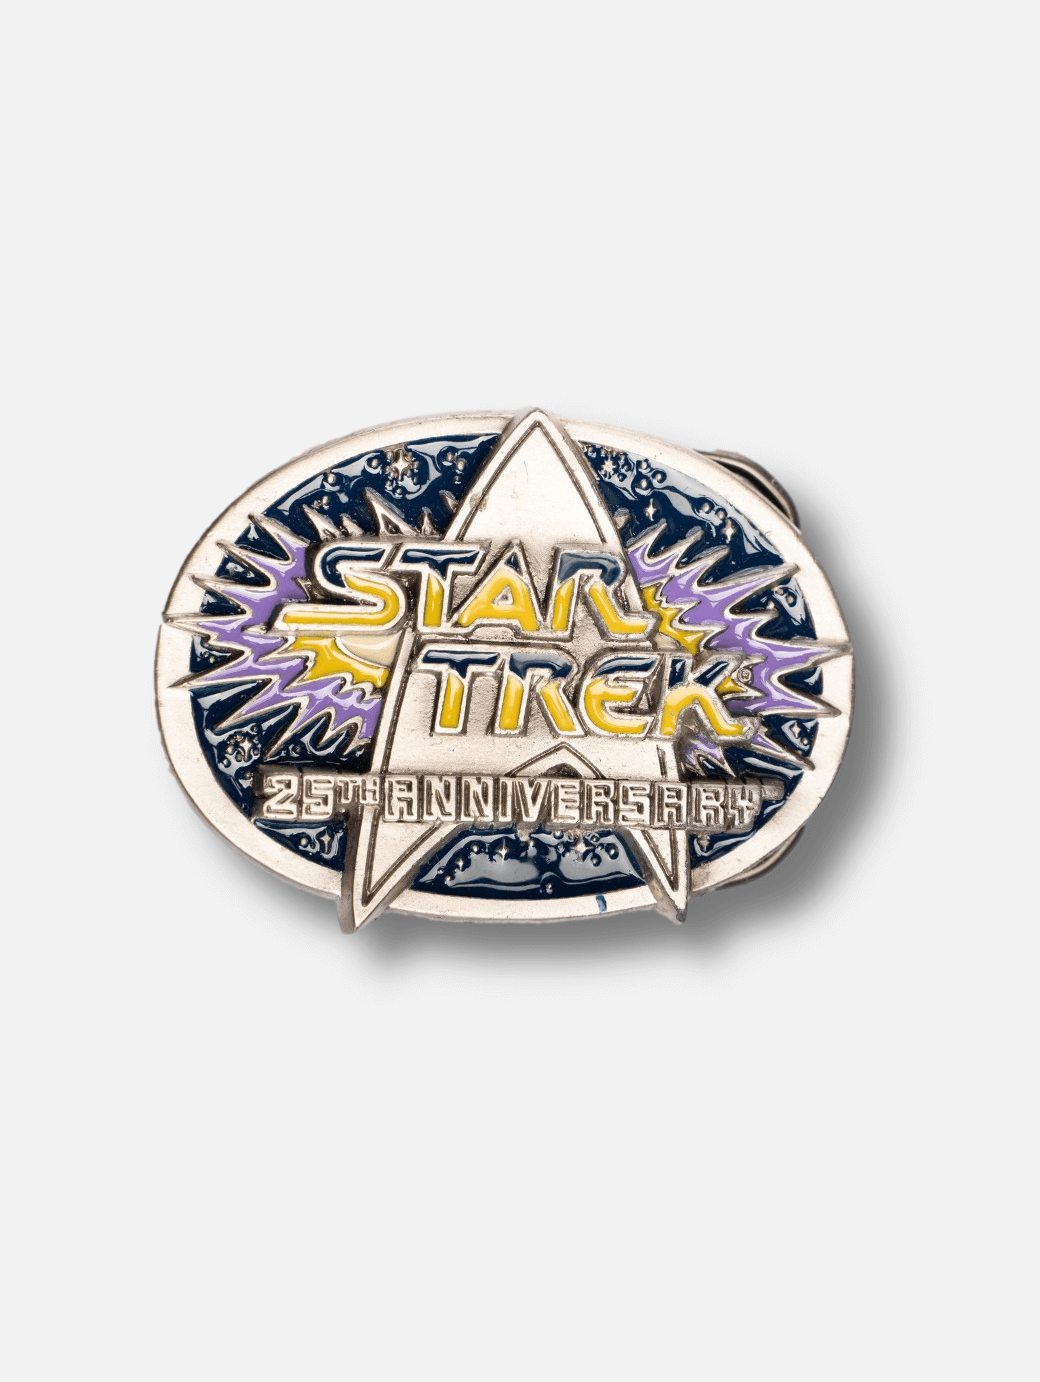 Star Trek - 25th Anniversary buckle